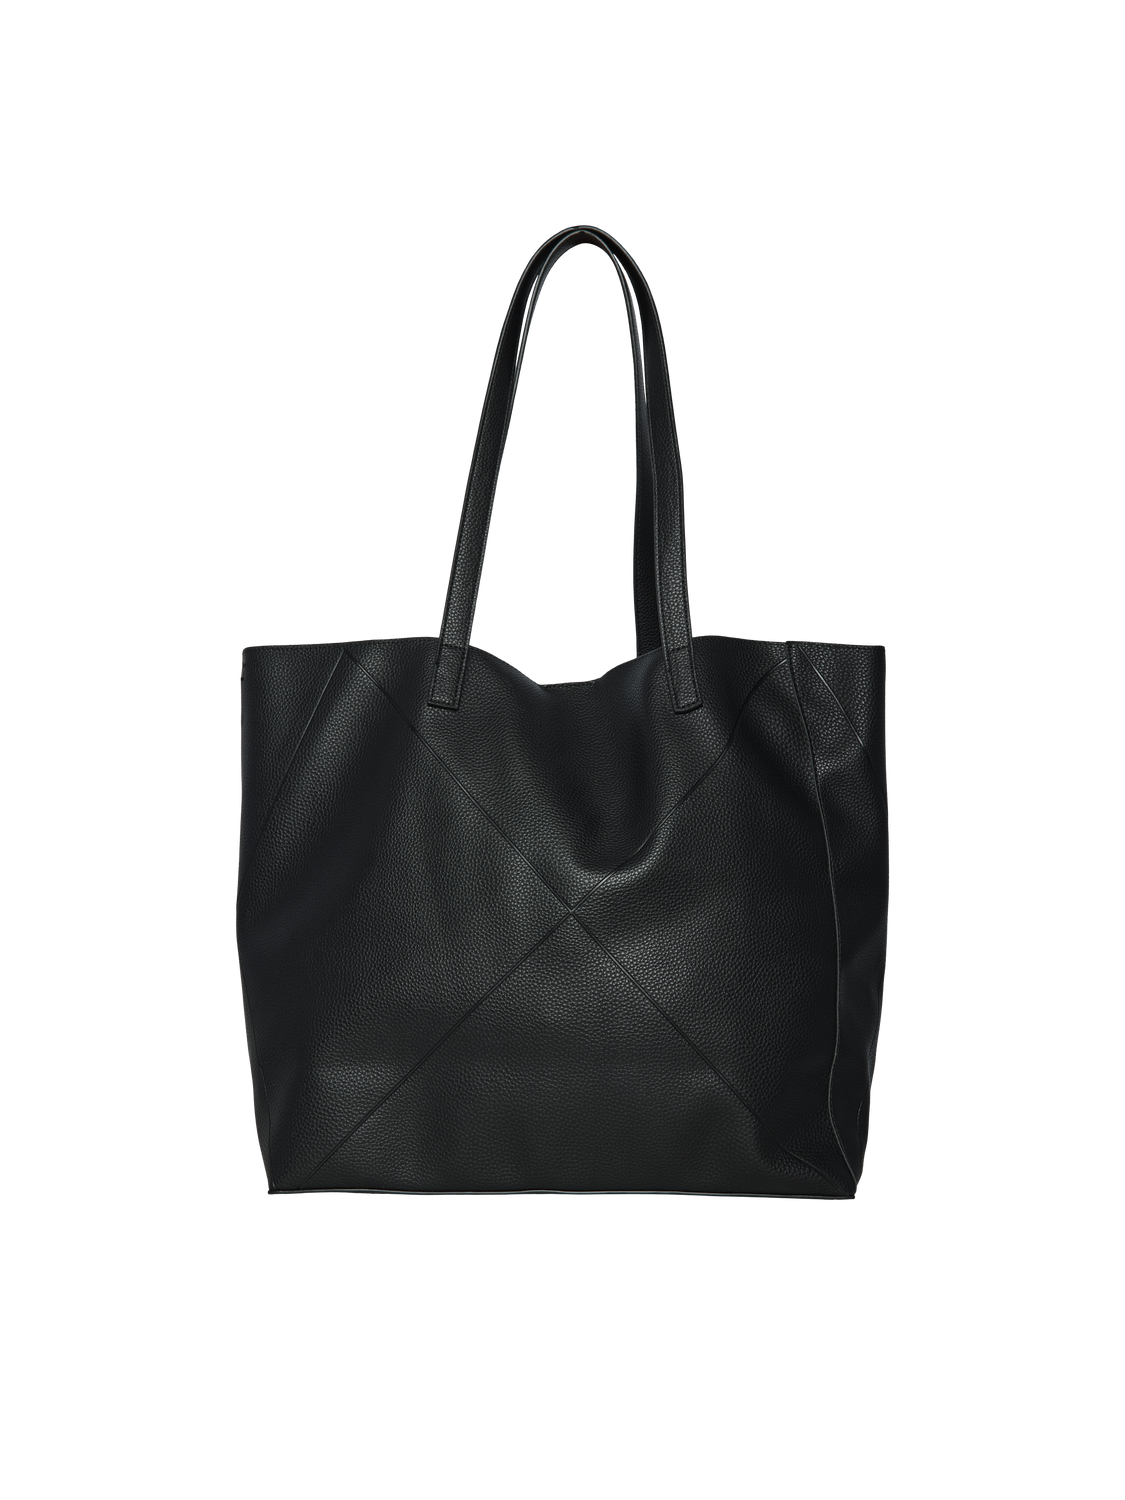 PCSOLA Handbag - Black